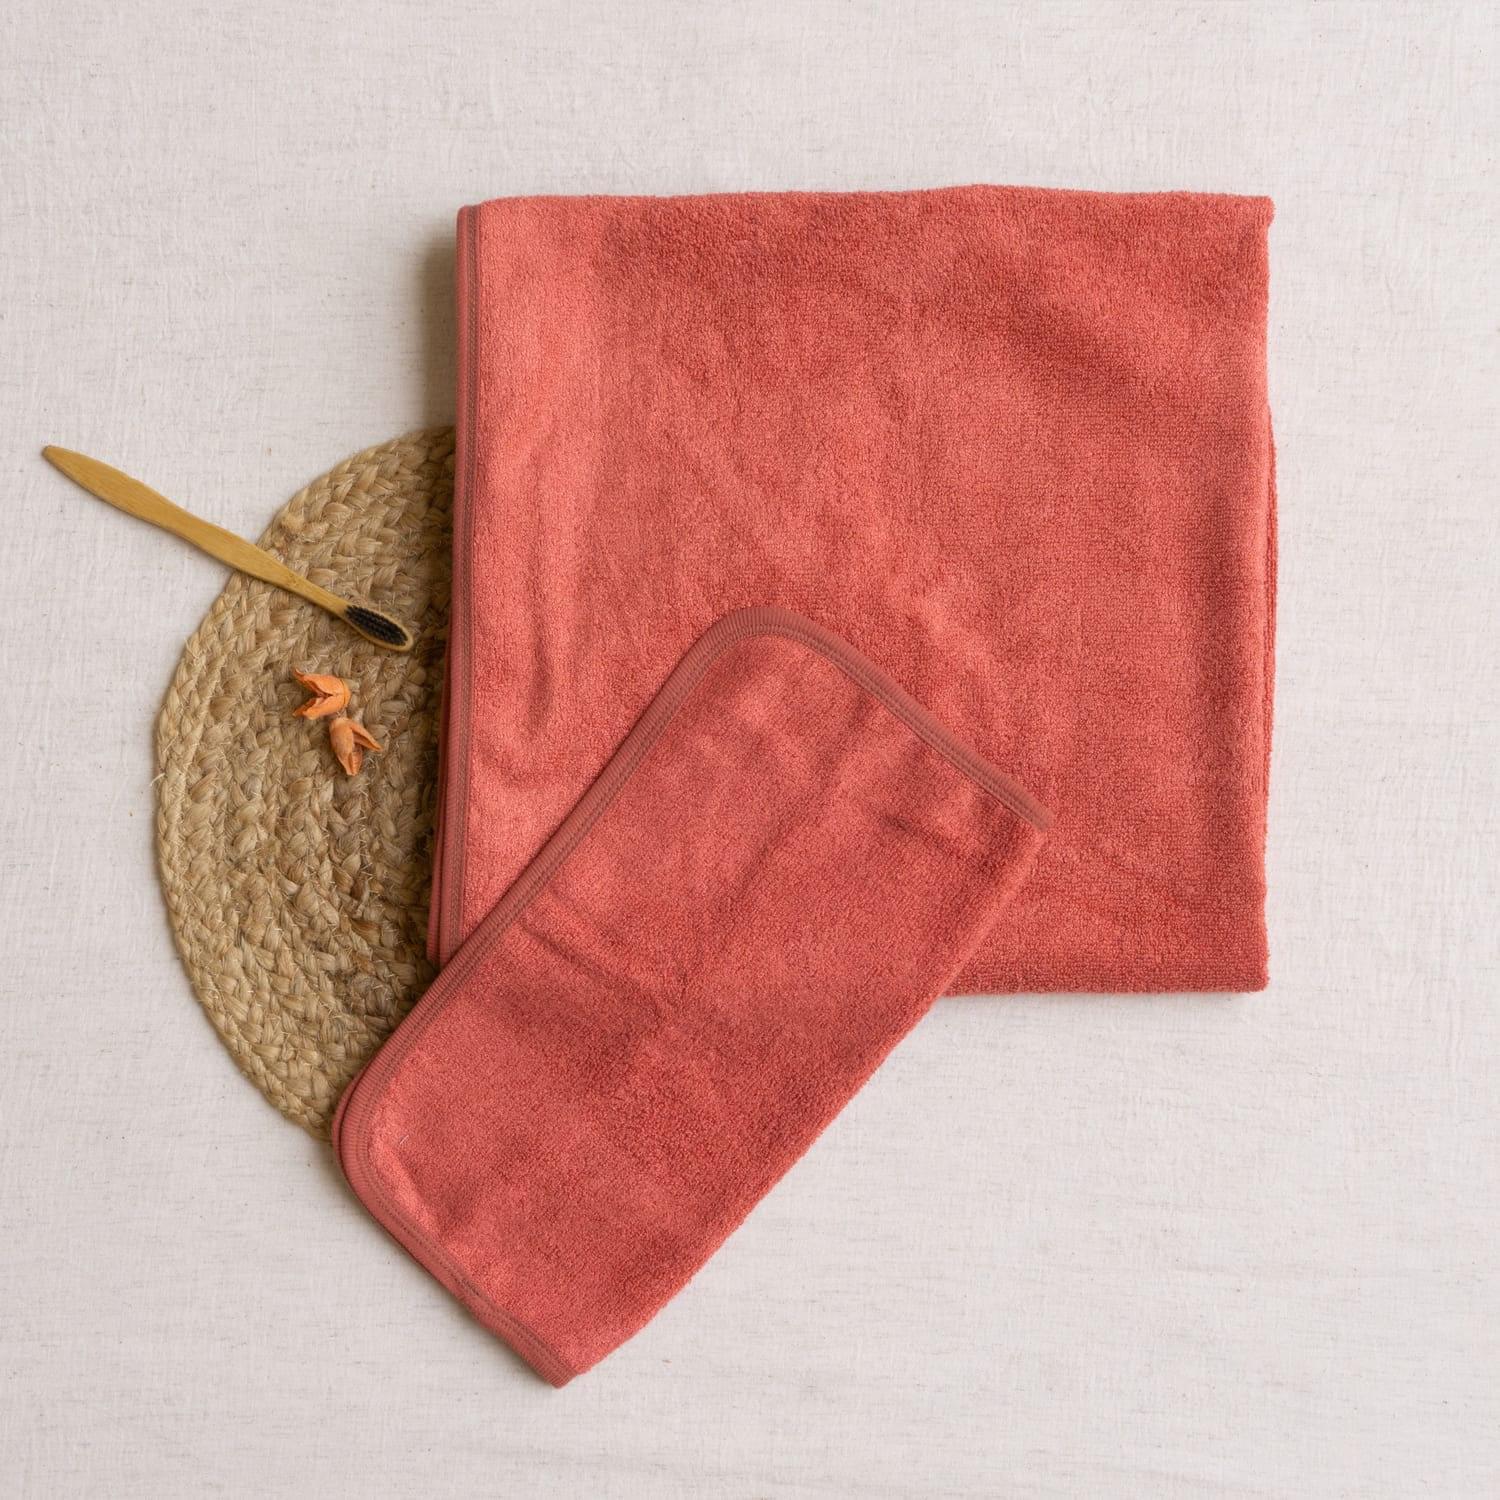 bamboo terry bath towel & face towel